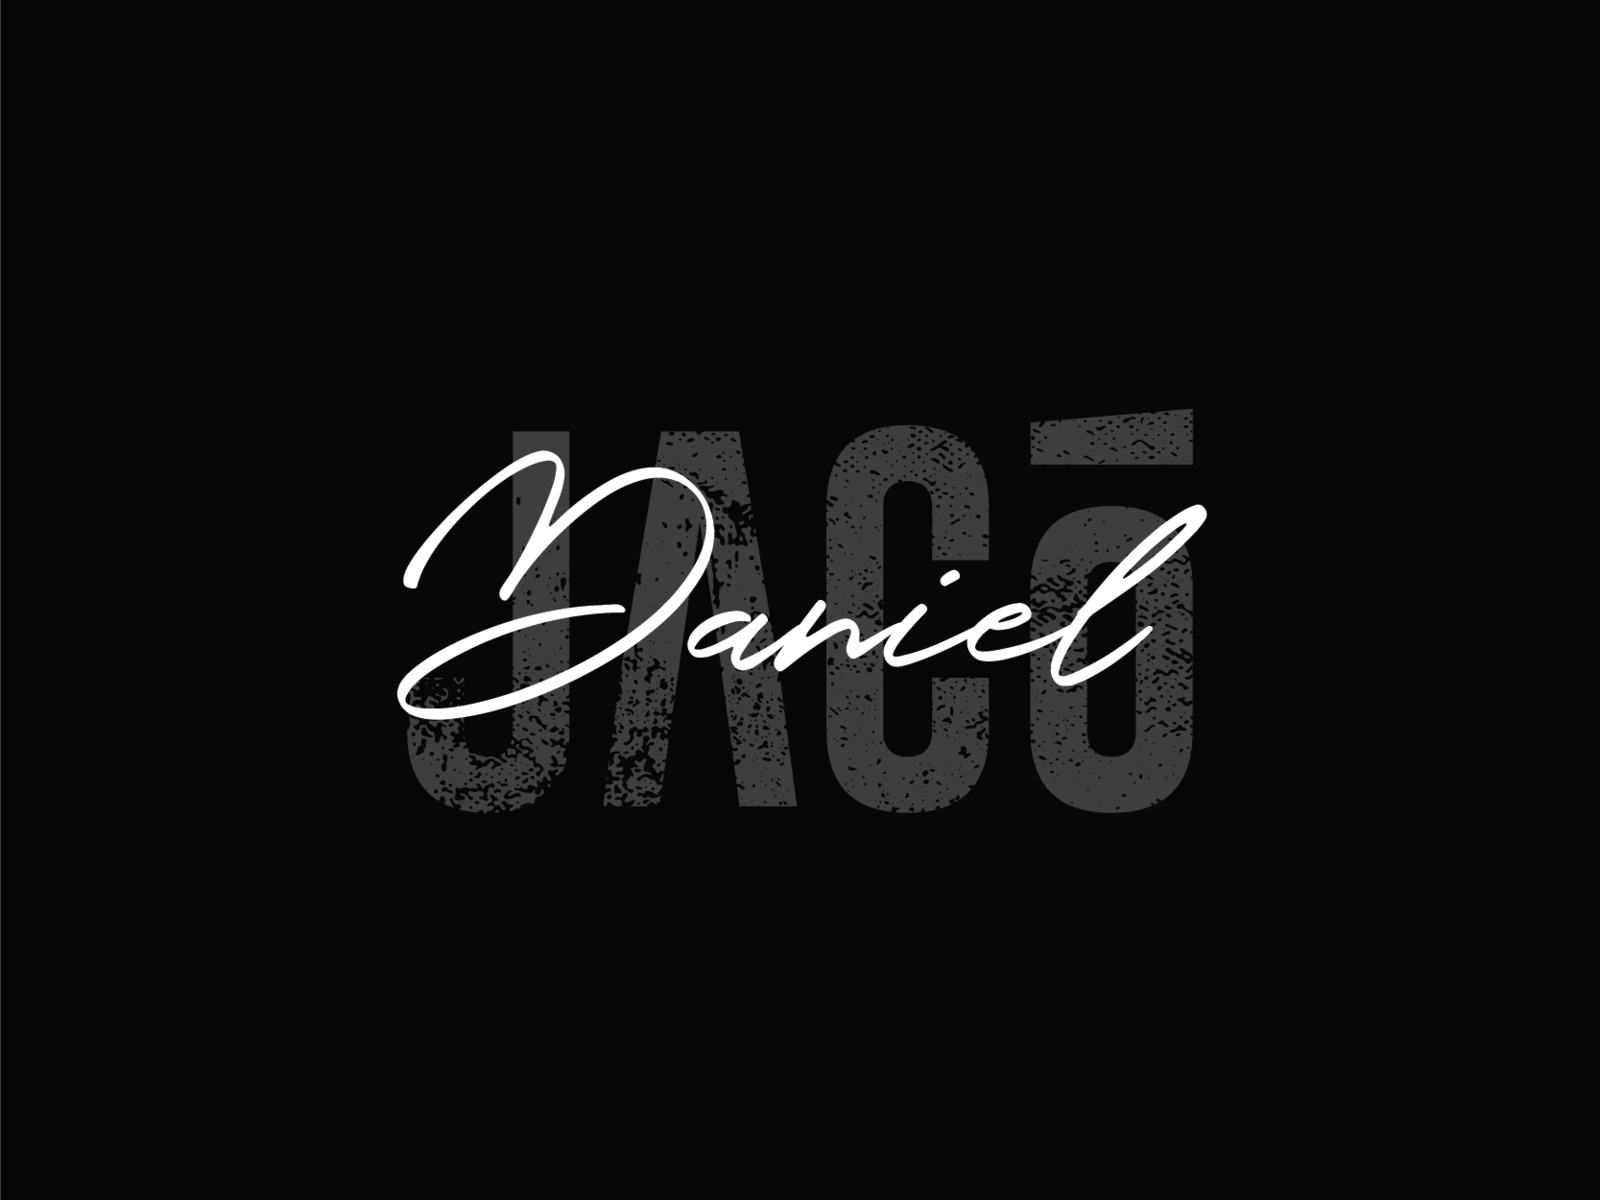 DJ Duo Font - Logo in Black by André Piçarra on Dribbble